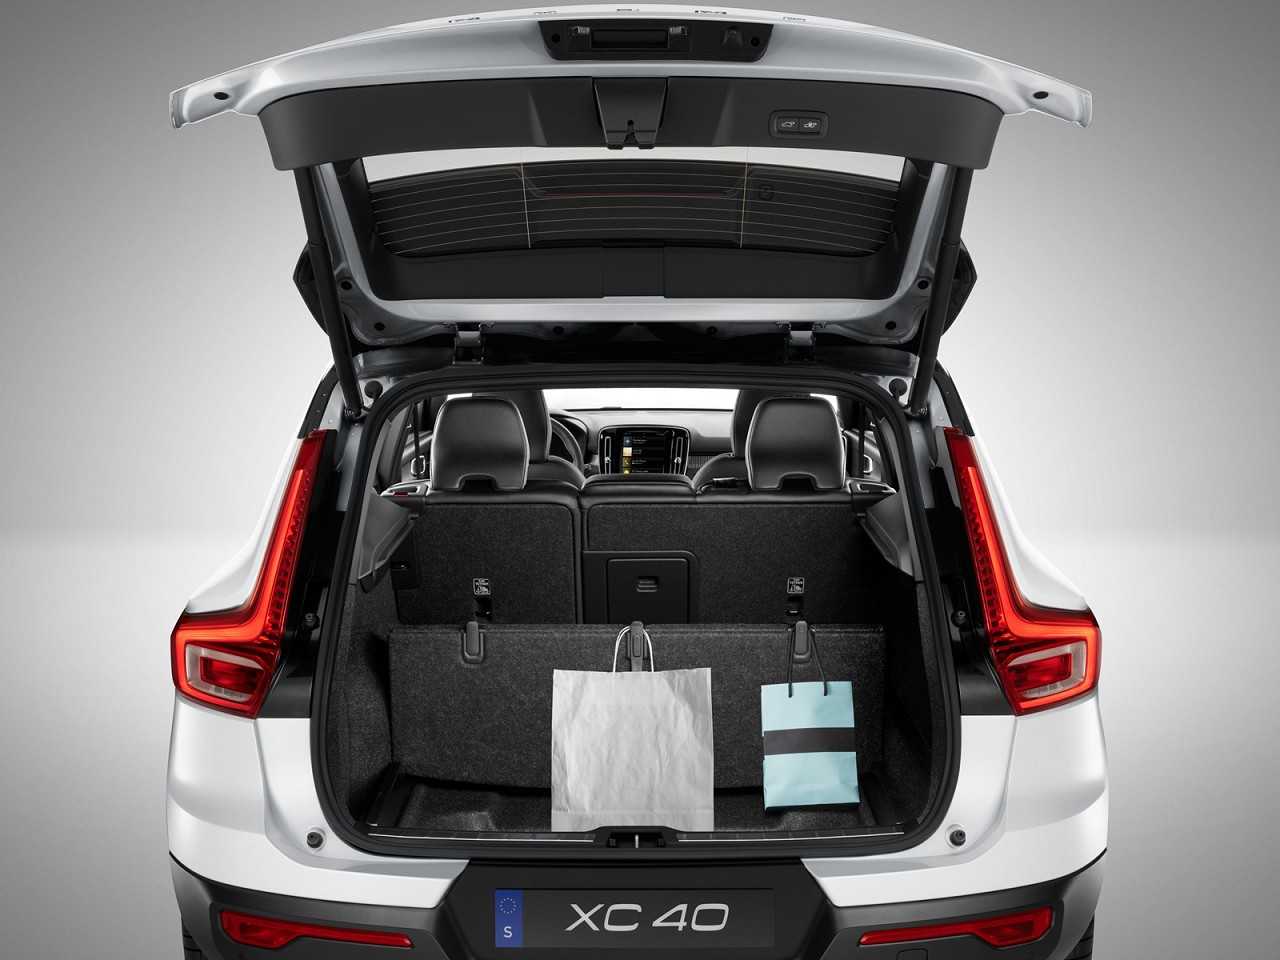 VolvoXC40 2019 - porta-malas